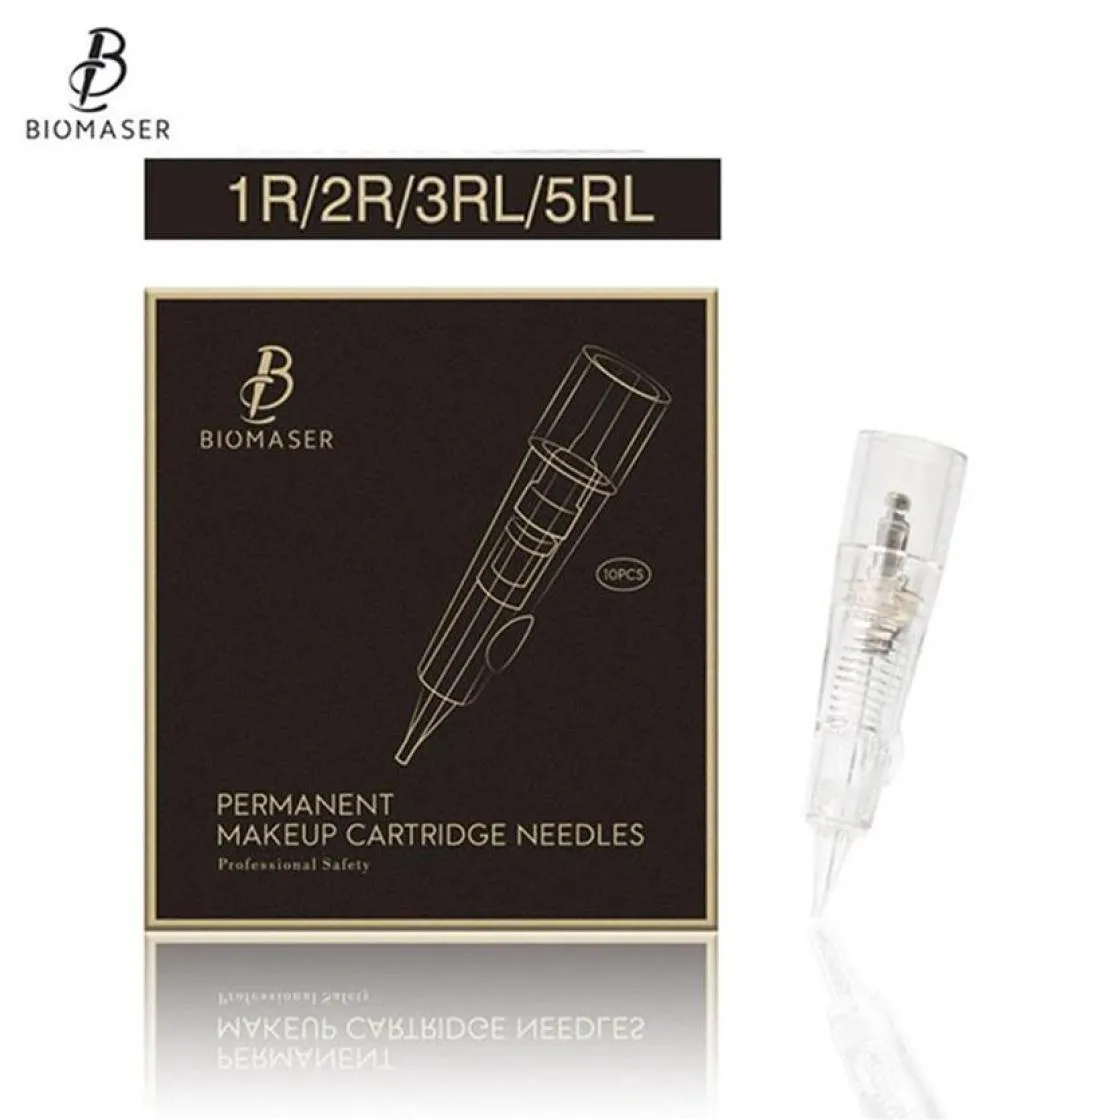 Biomaser Professional Permanent Makeup Cartridge Needles 1R 2R 3RL 5RL使い捨てタトゥーペンマシン針のヒント227A311792165